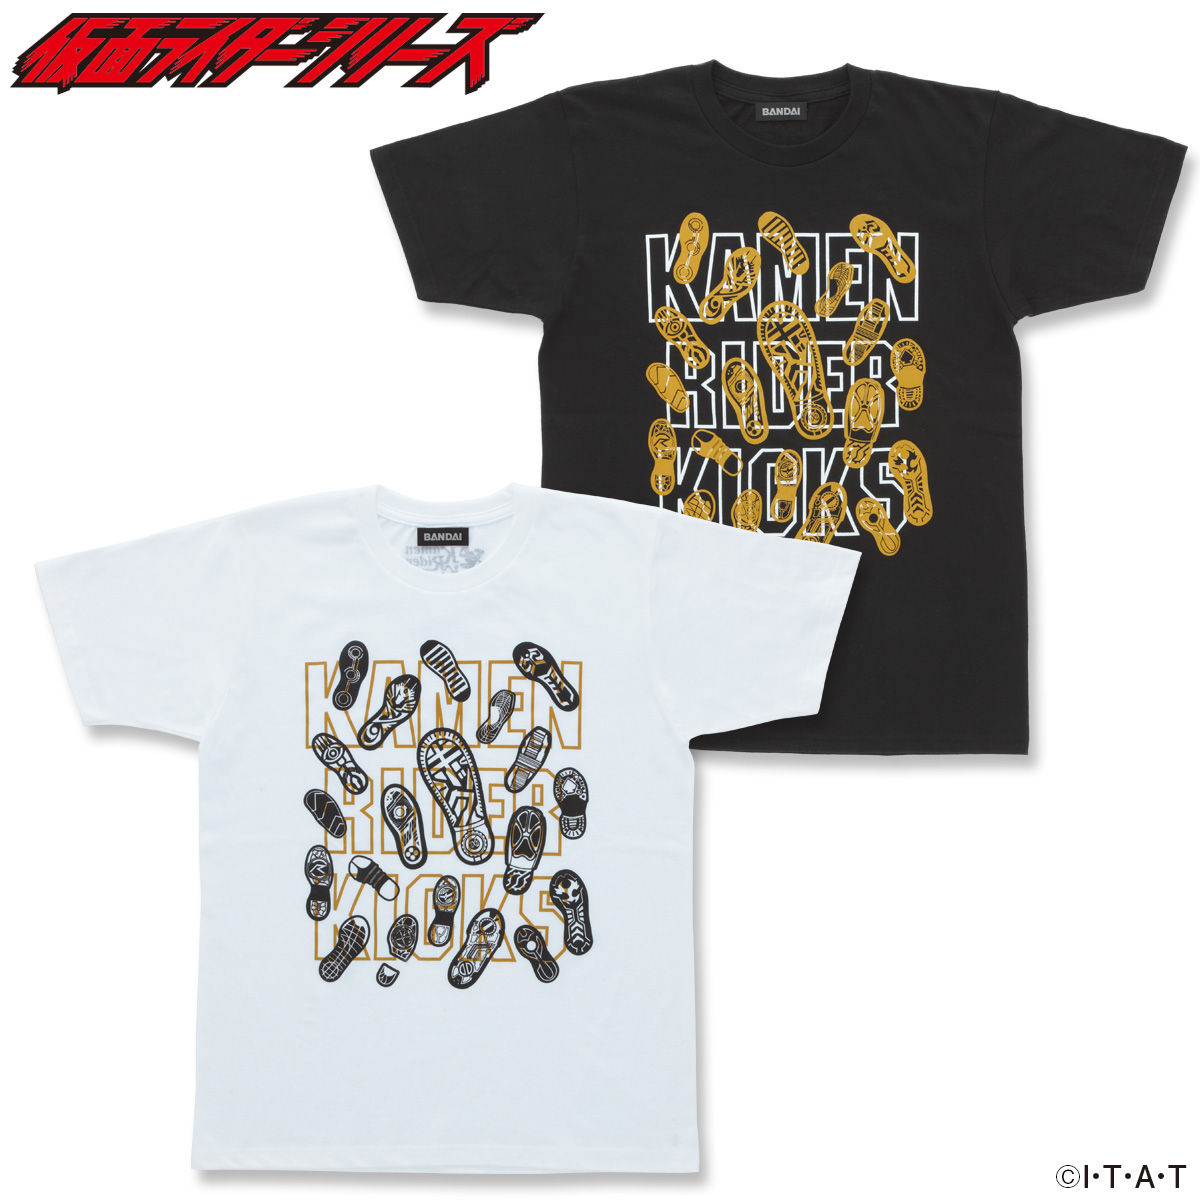 KAMEN RIDER ZI-O & HEISEI RIDER T-shirts (FOOT STAMP)